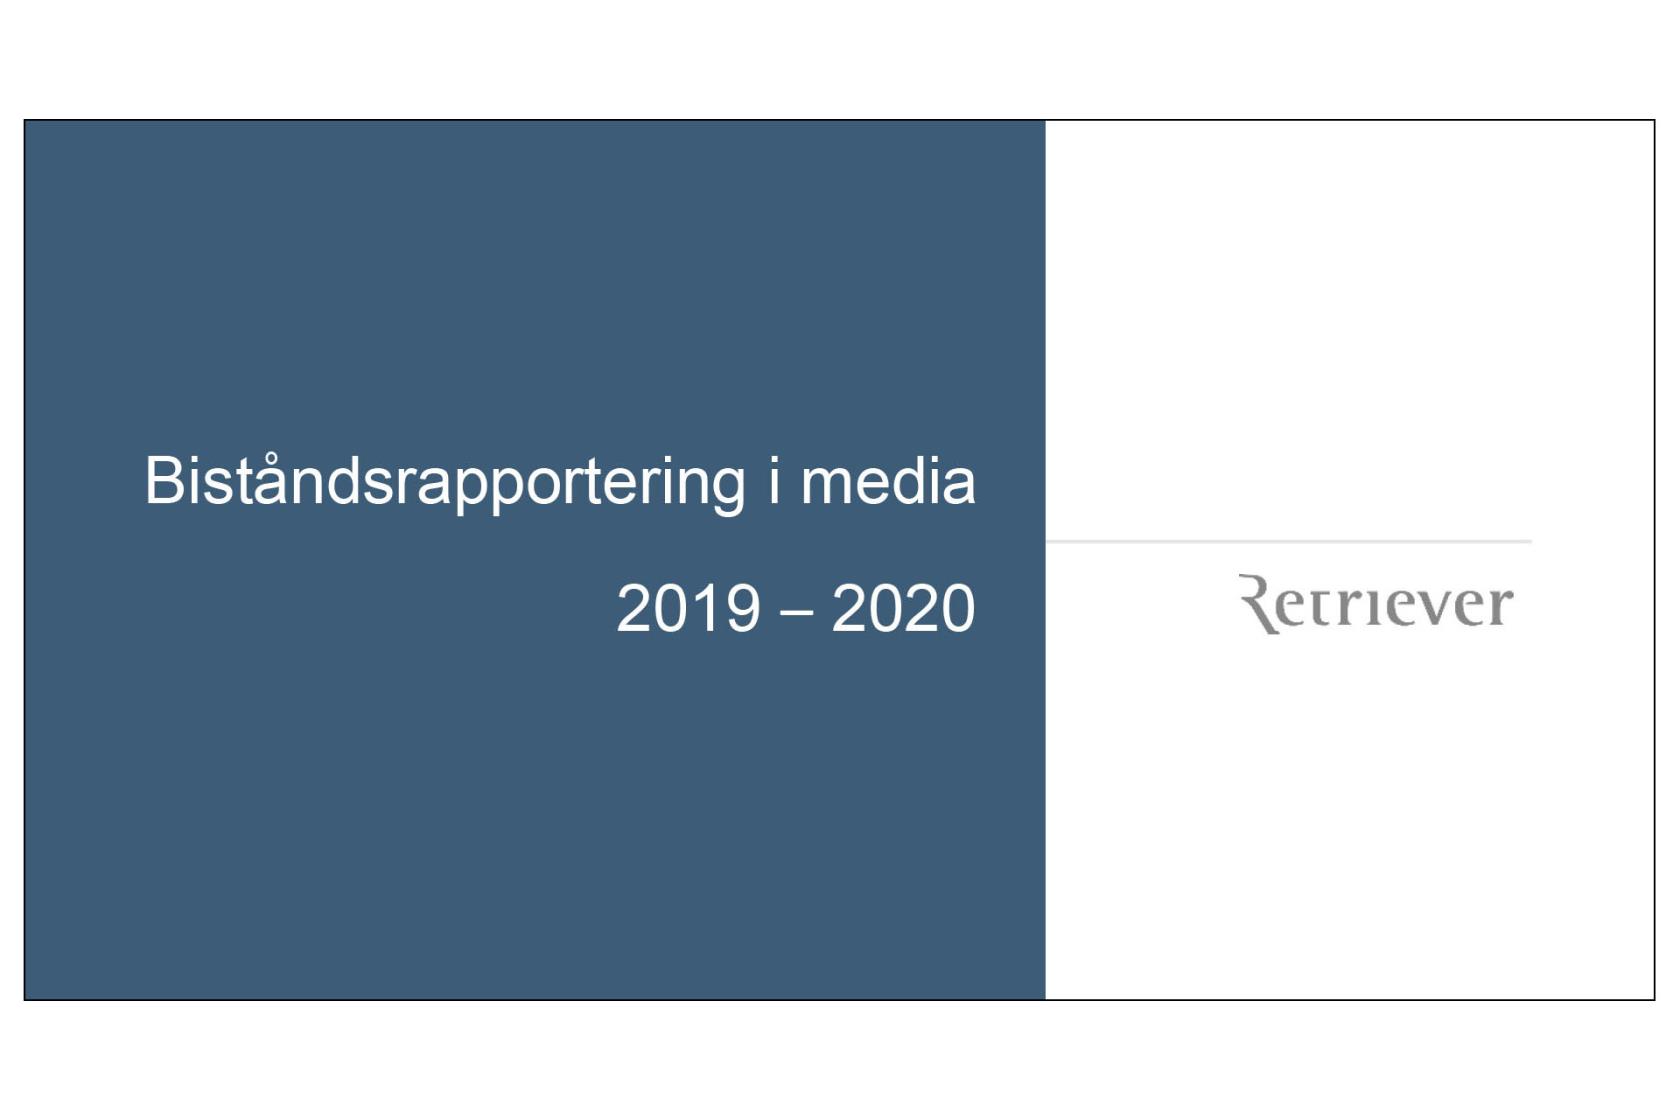 Vit text på blå bakgrund. Det står Biståndsrapportering i media 2019-2020. 